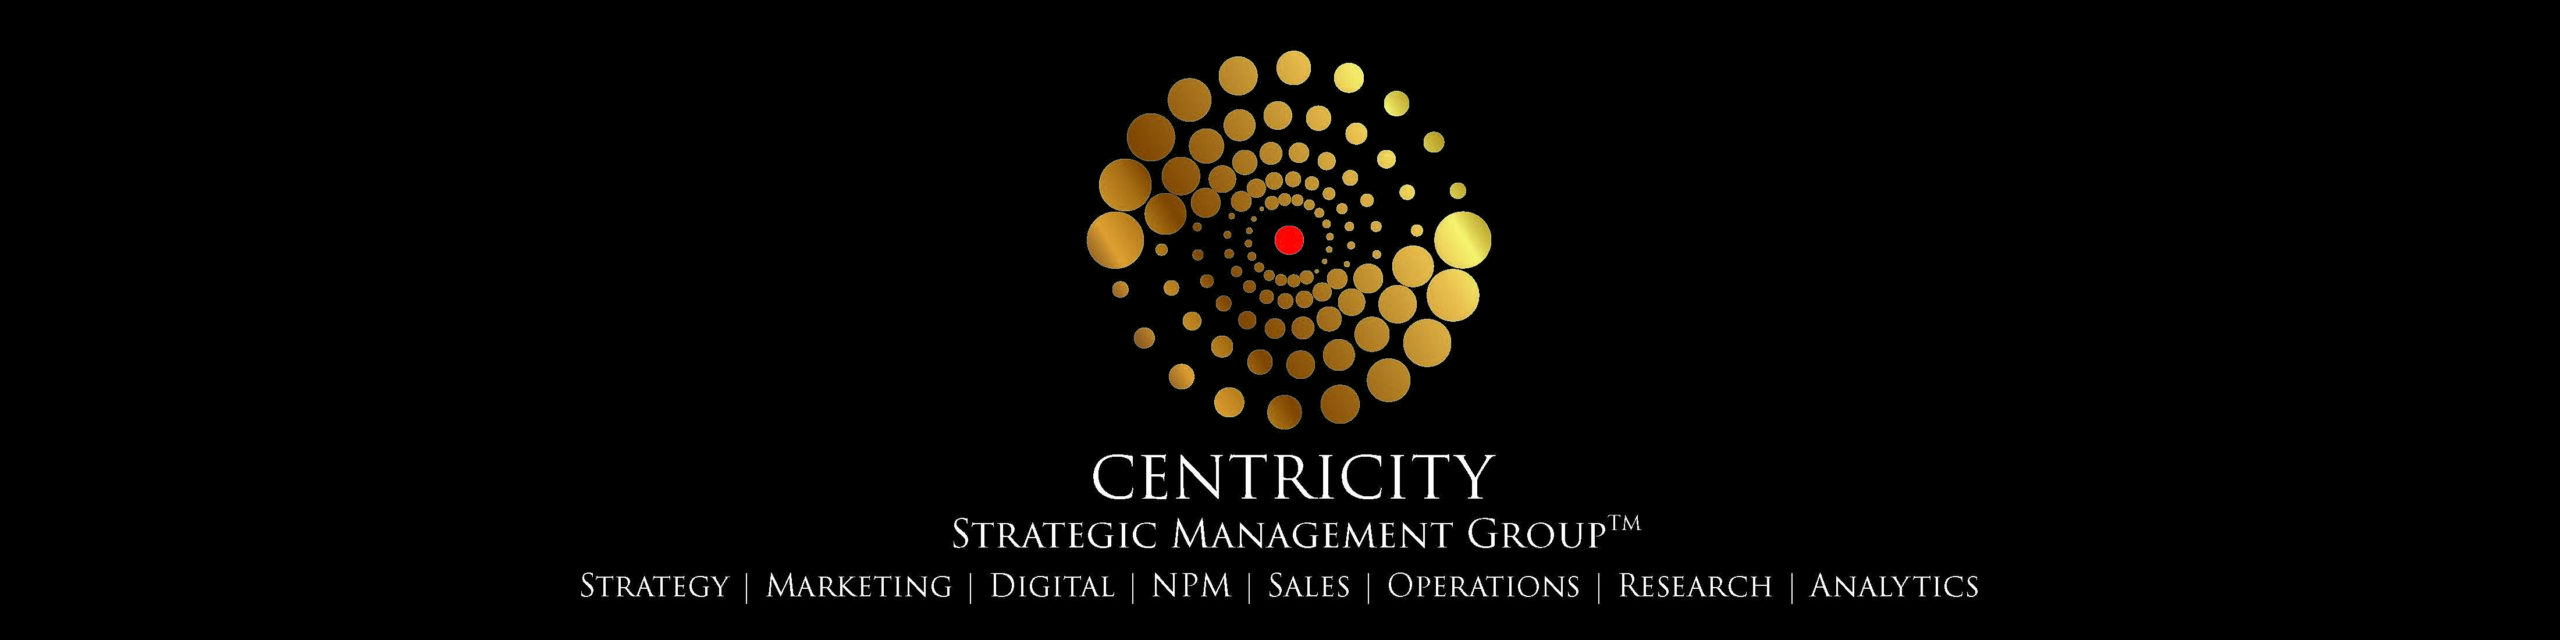 Centricity Strategic Management Group